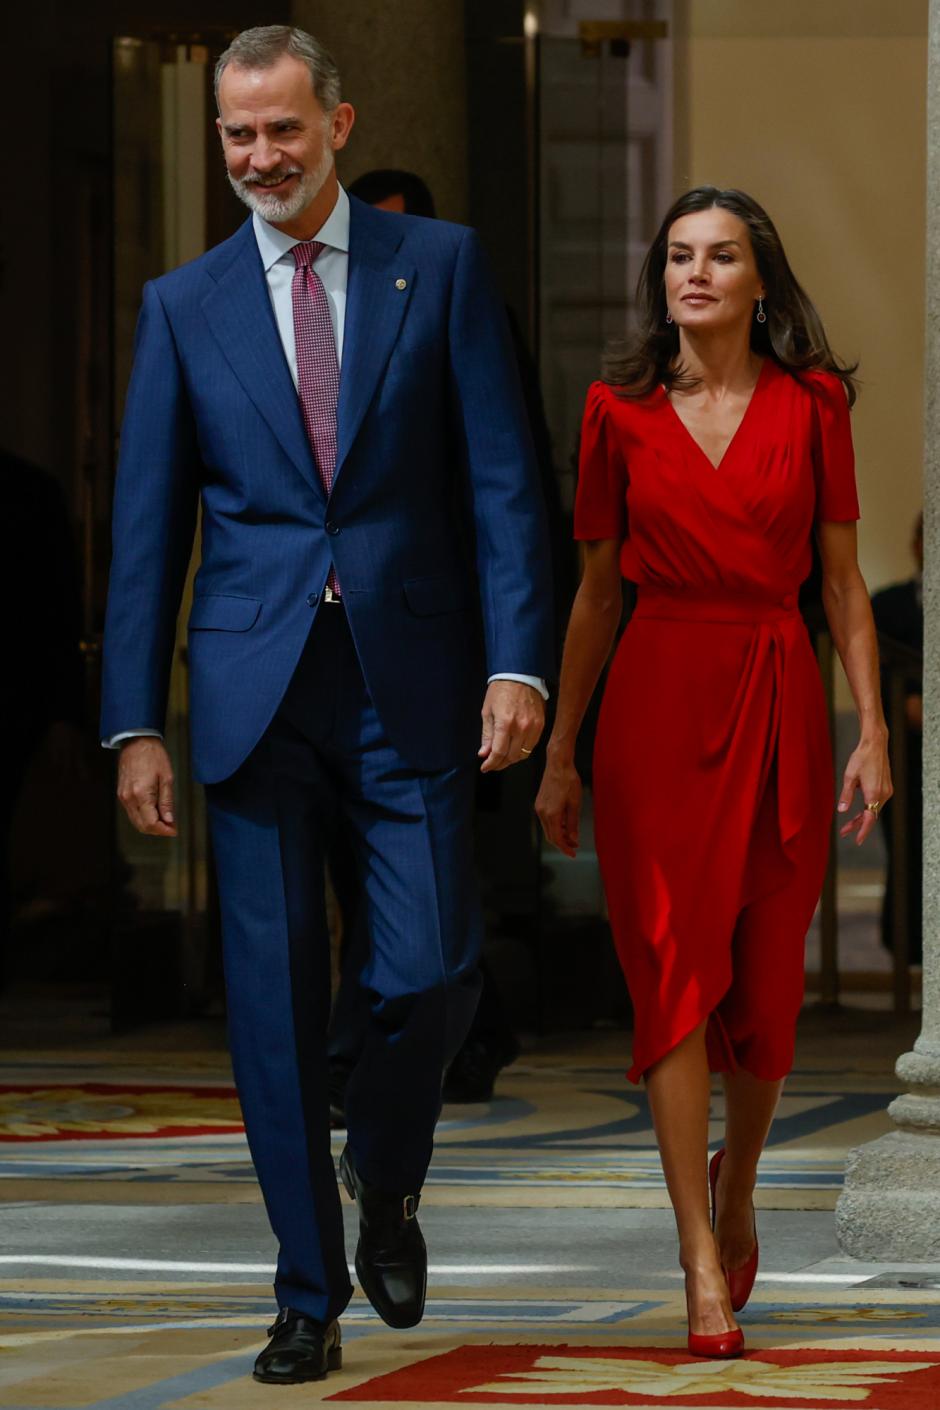 Spanish King Felipe VI and Letizia Ortiz during National Sports Awards 2022 in Madrid on Monday, 18 July 2022.